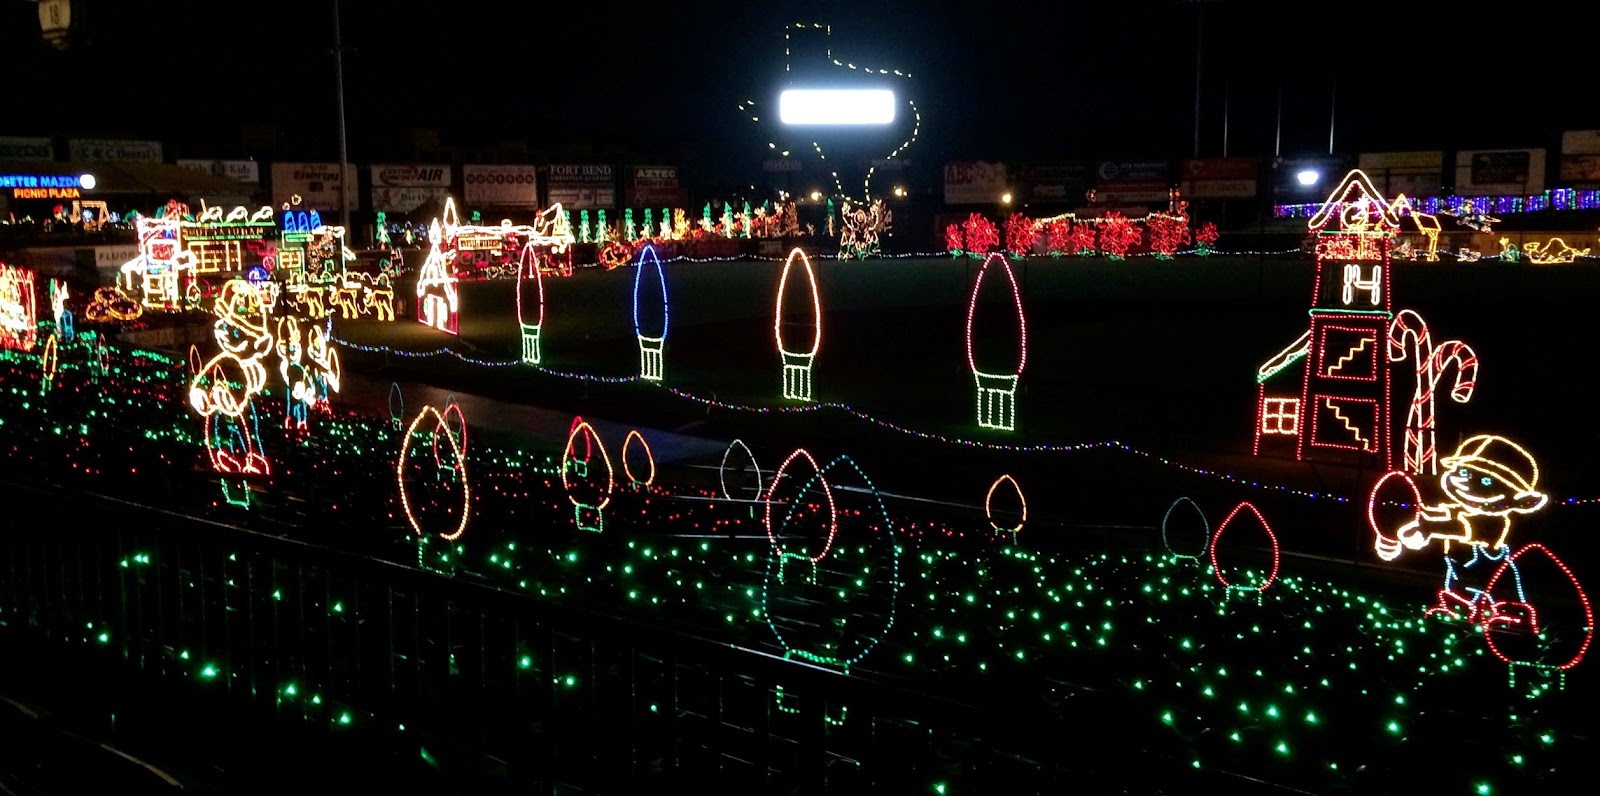 Exhibit B: Sugar Land Holiday Lights !